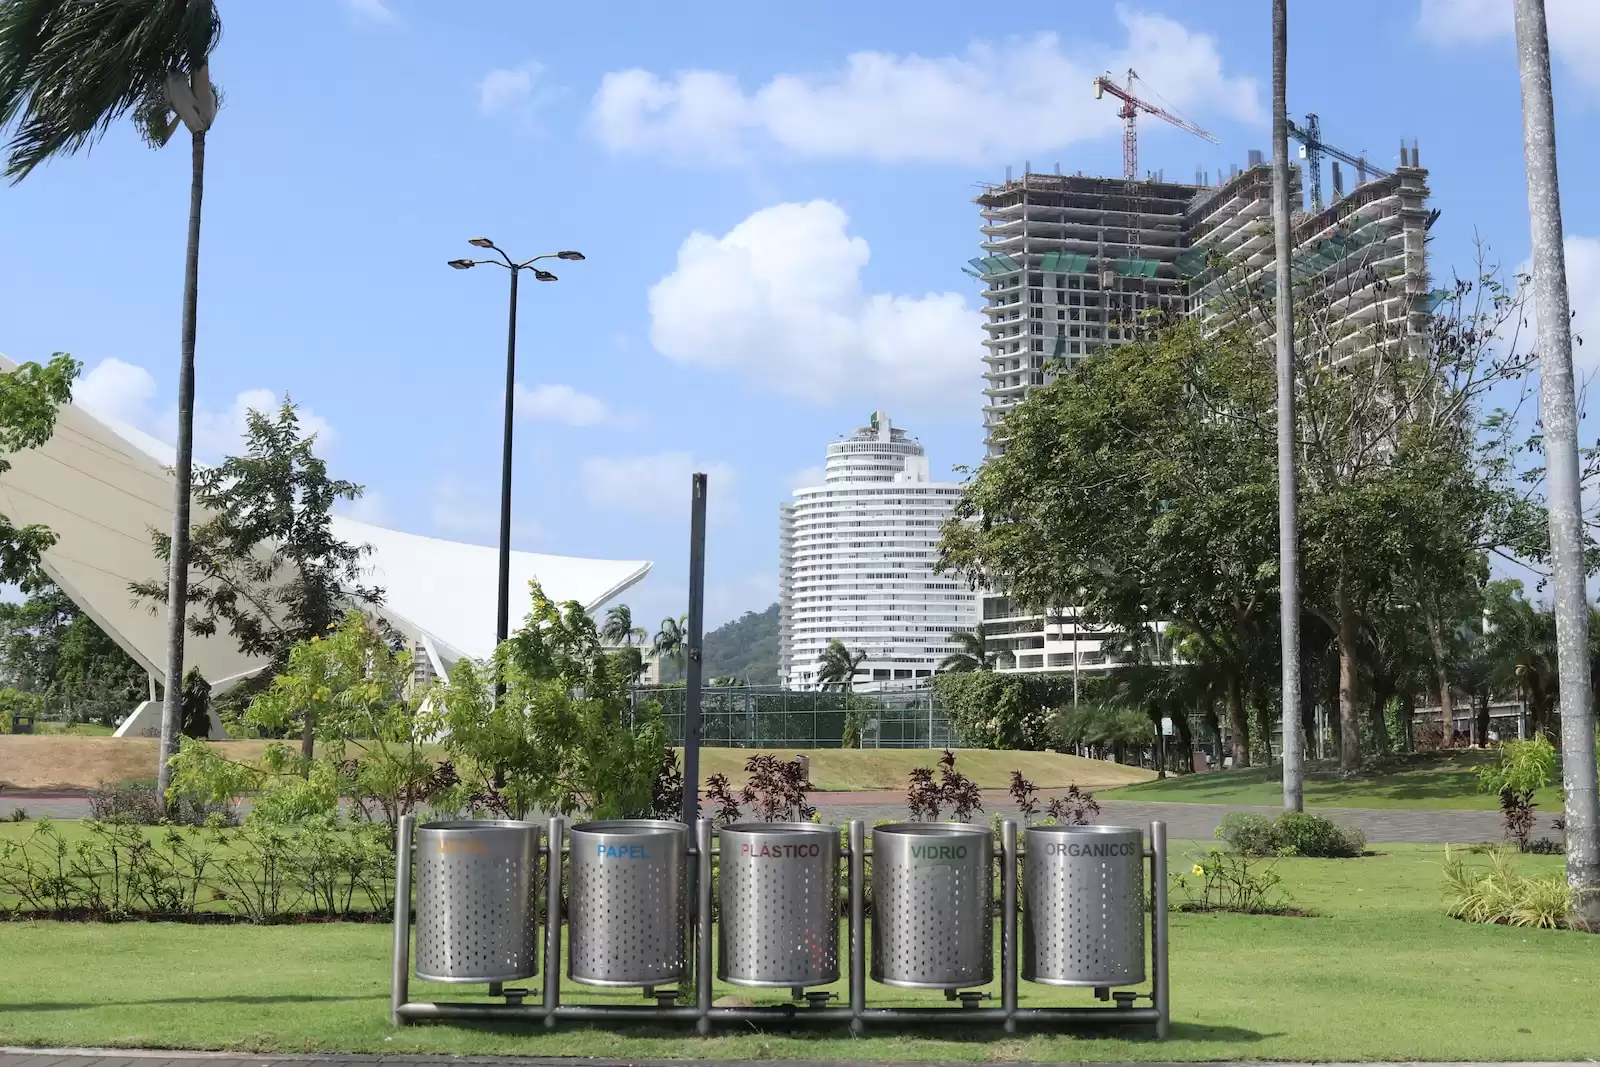 prinsip 5R - stainless steel trash bins on green grass field during daytime